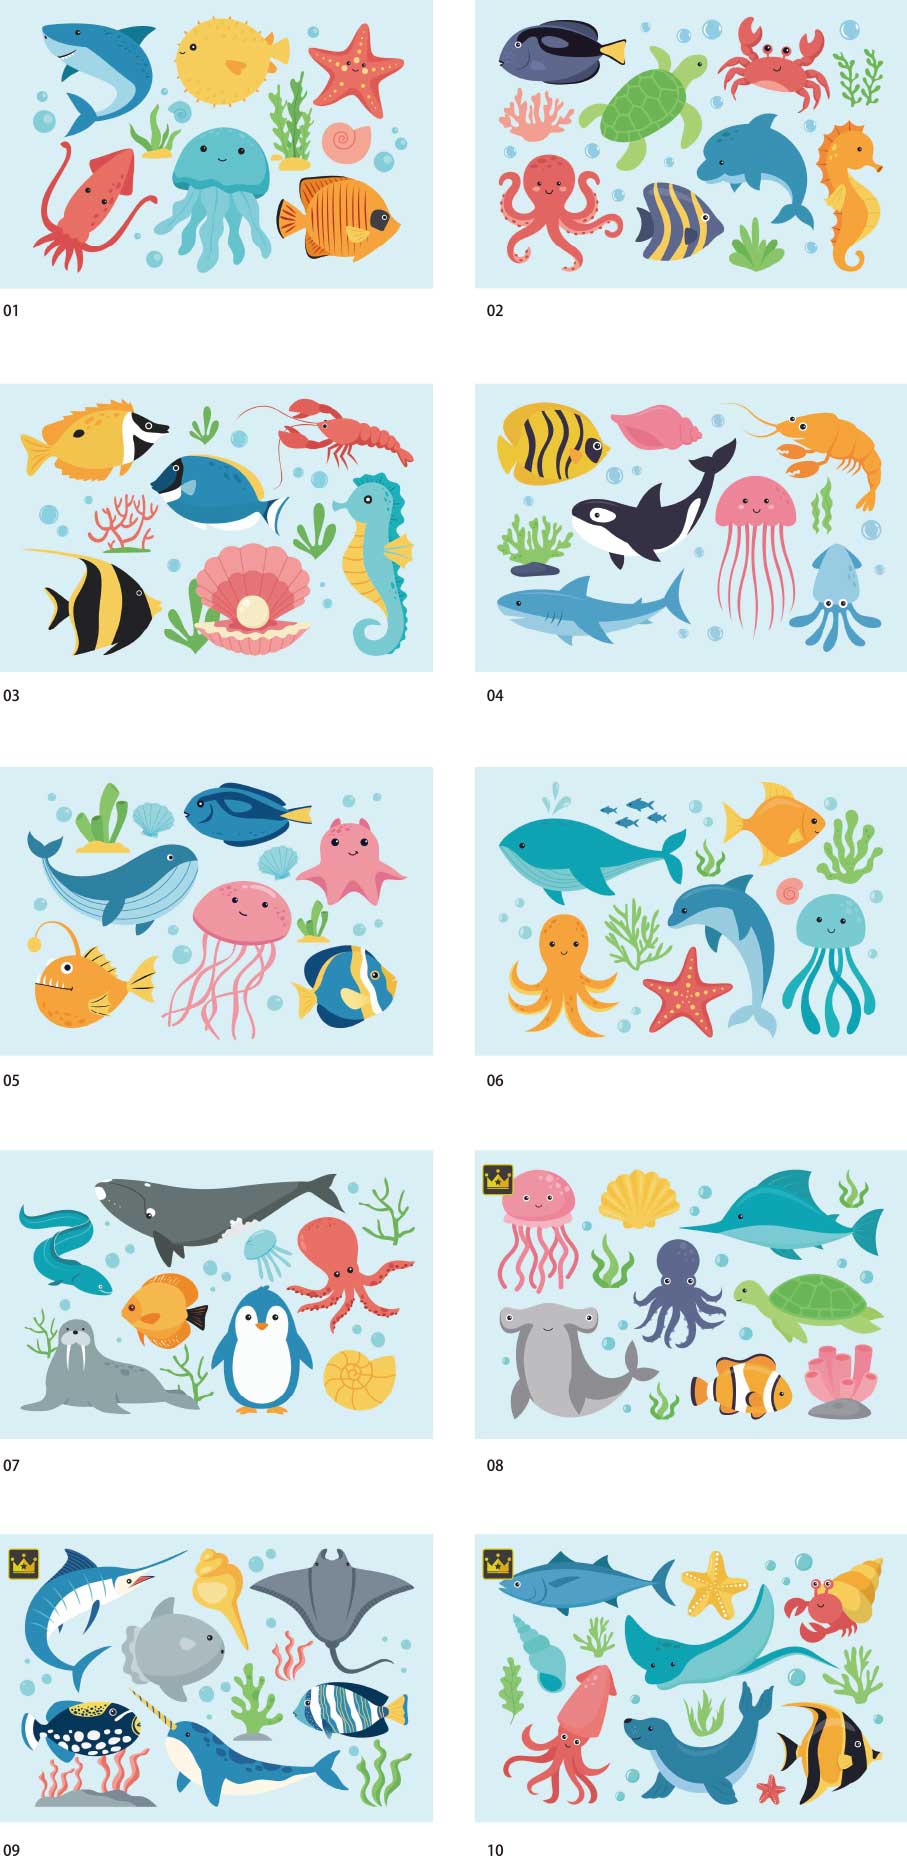 Sea Creatures Illustration Collection vol.3